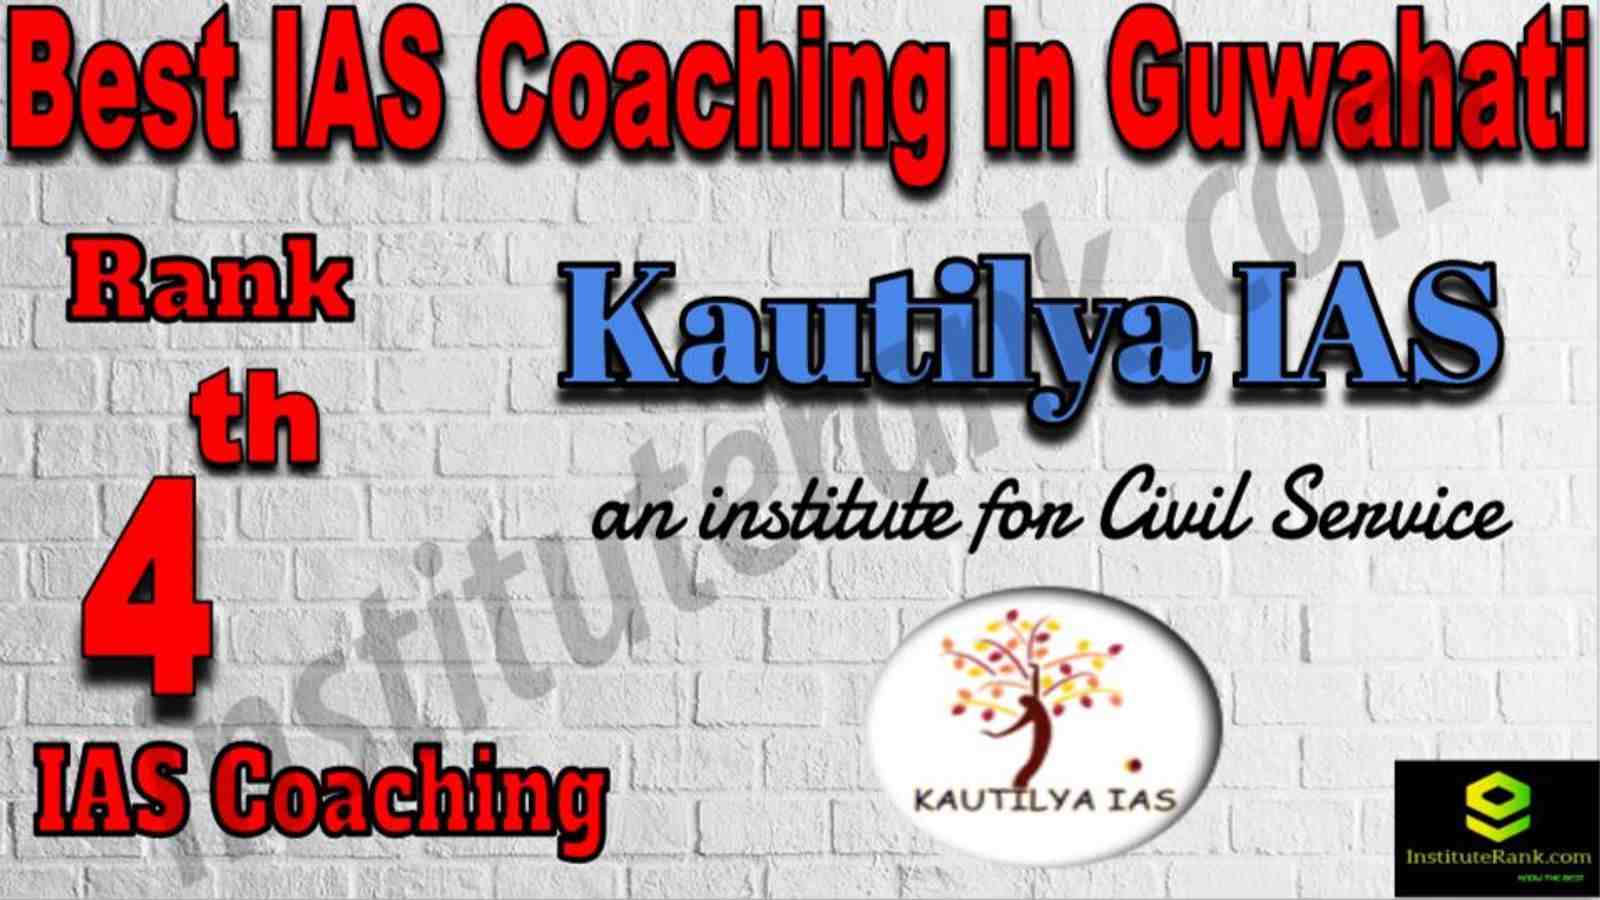 4th Best IAS Coaching in Guwahati